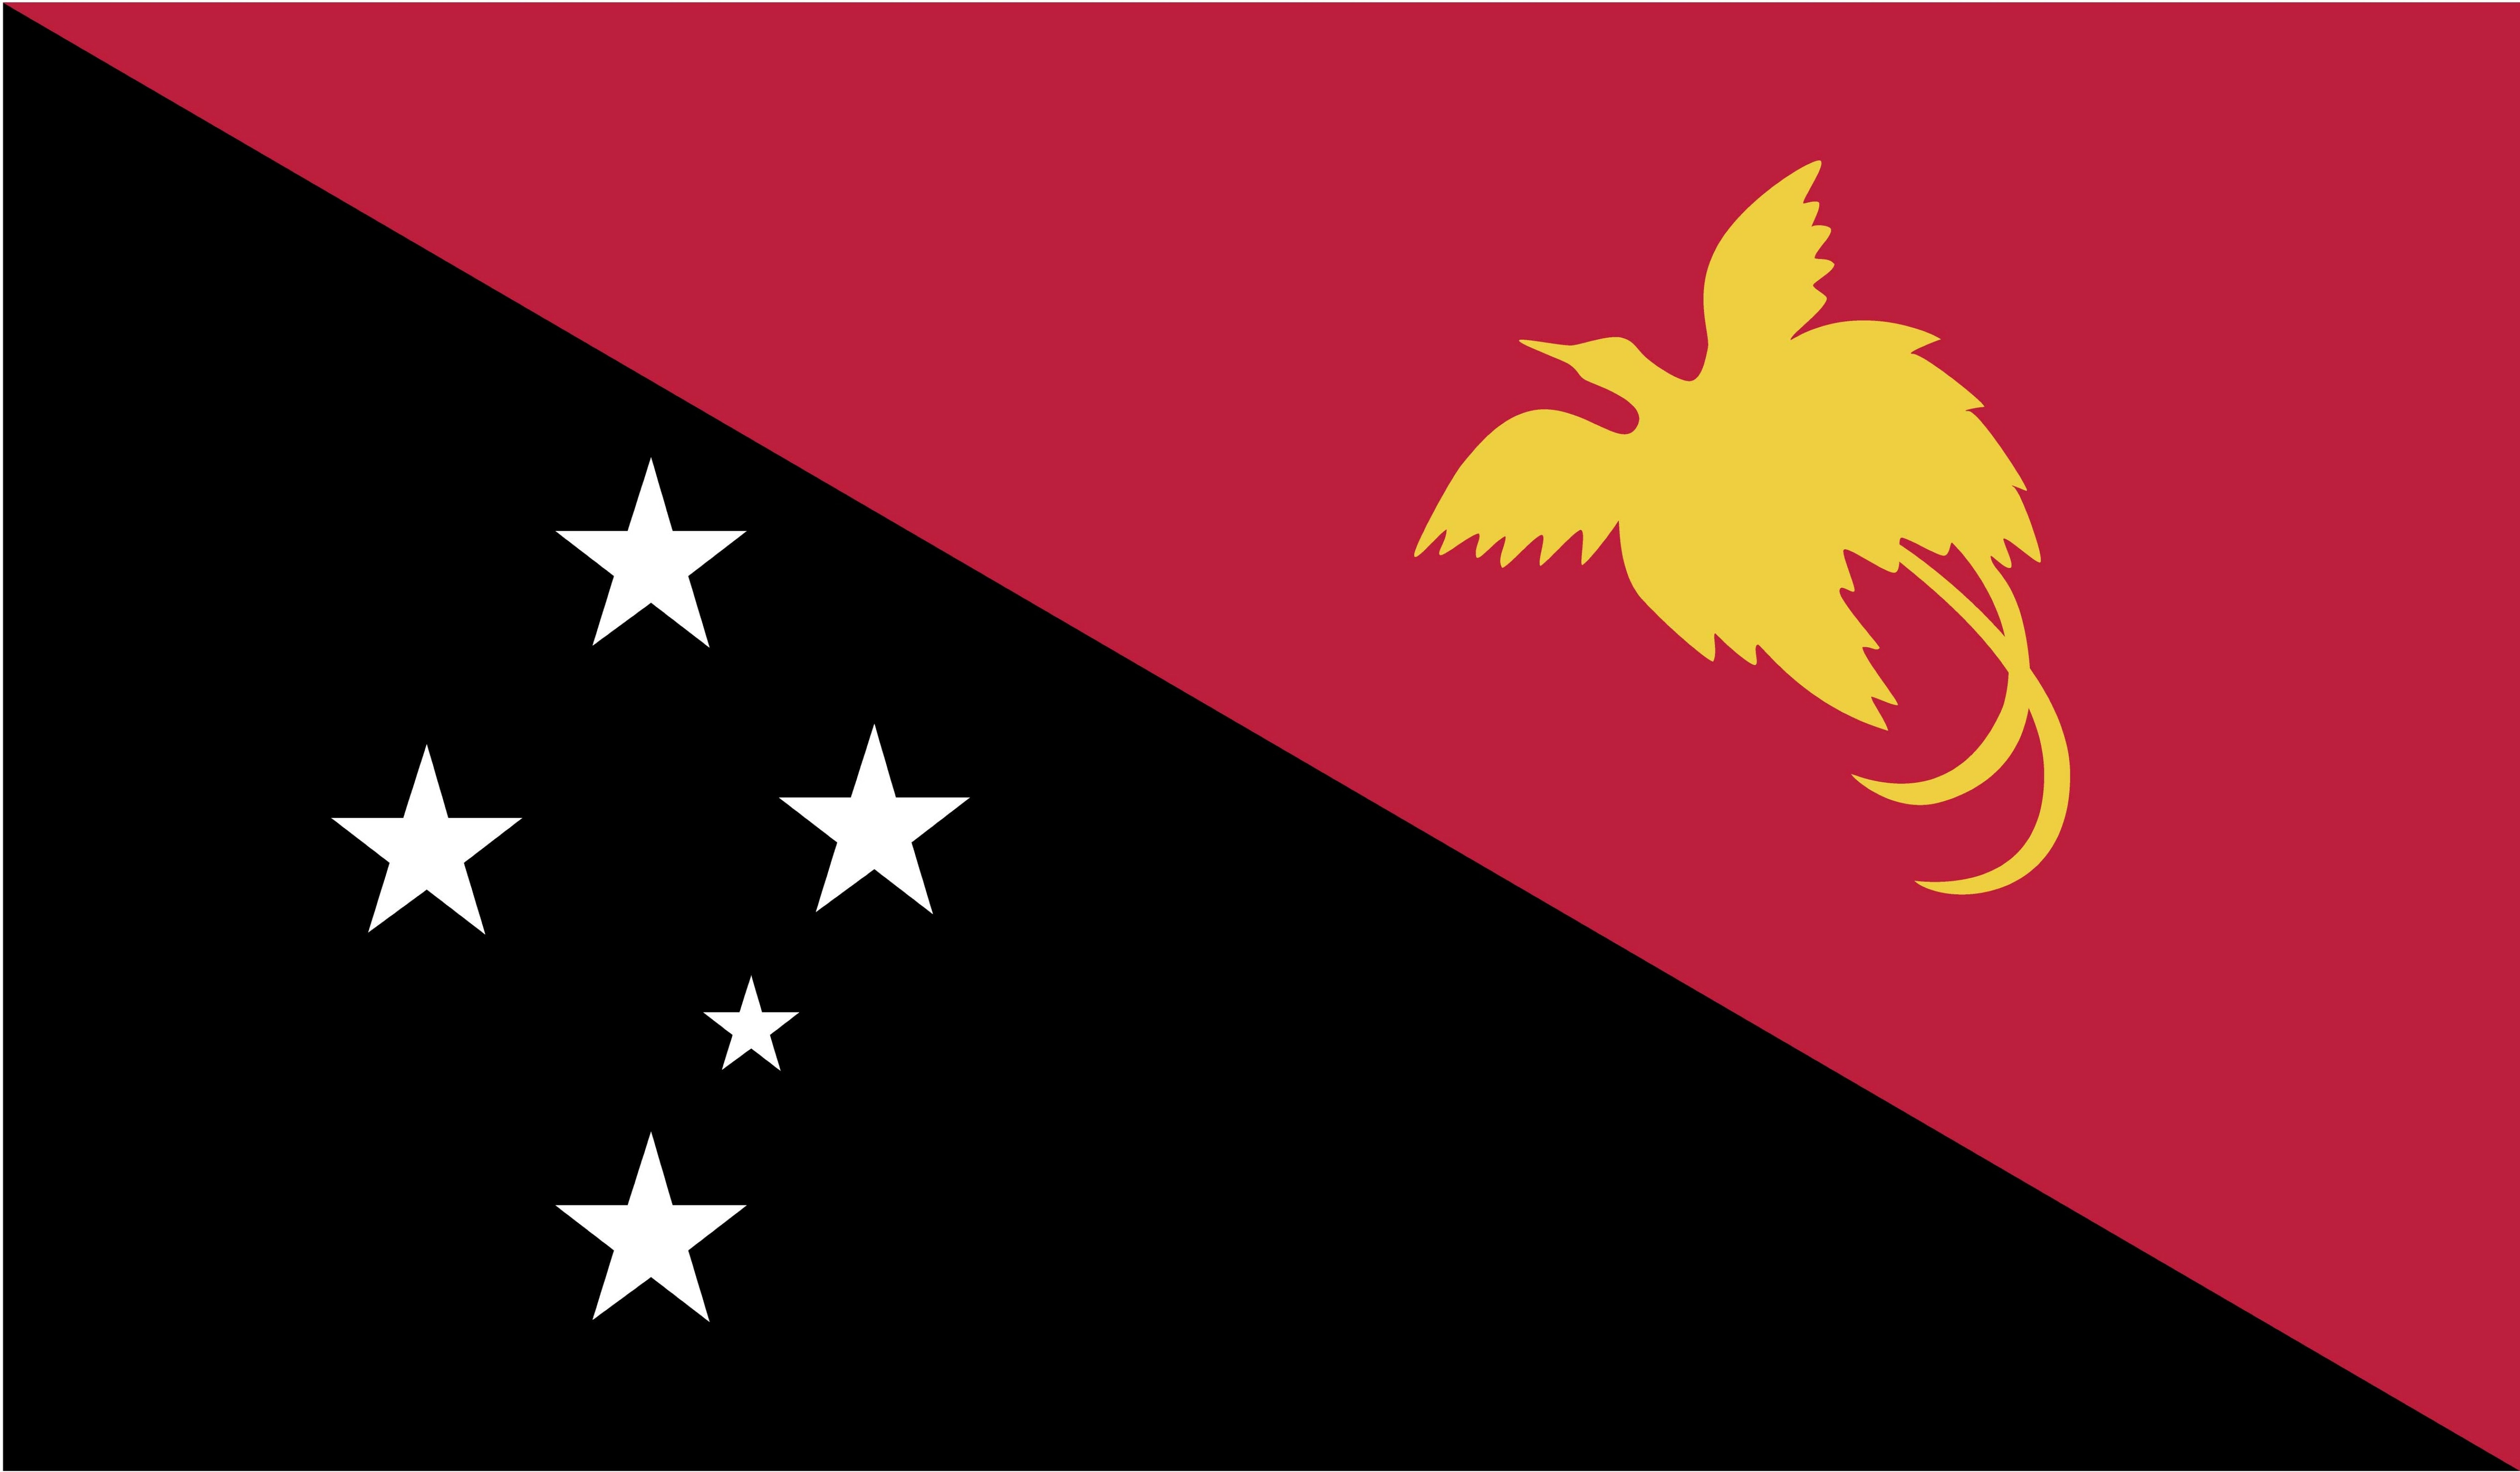 Papua New Guinea National Fishing Titles Team Flag | CatchStat.com Live Scoring